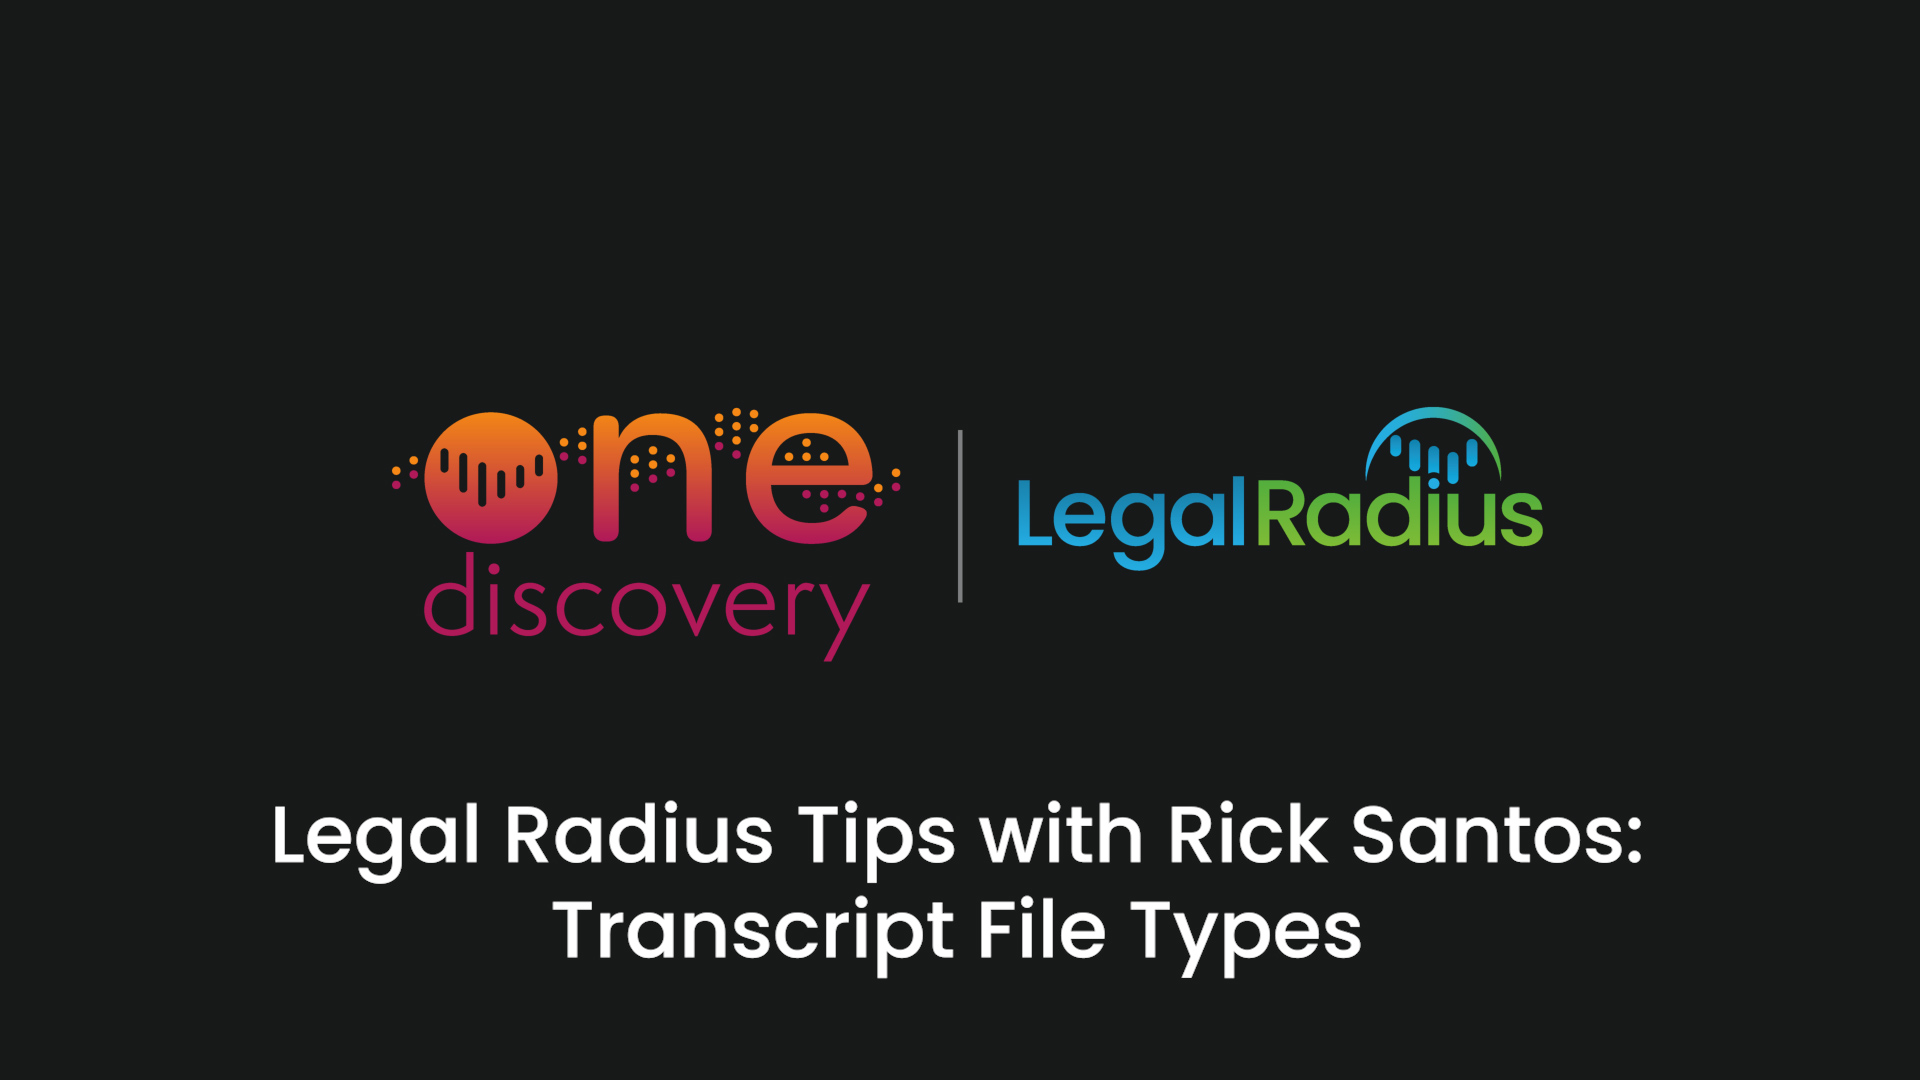 Transcript File Types